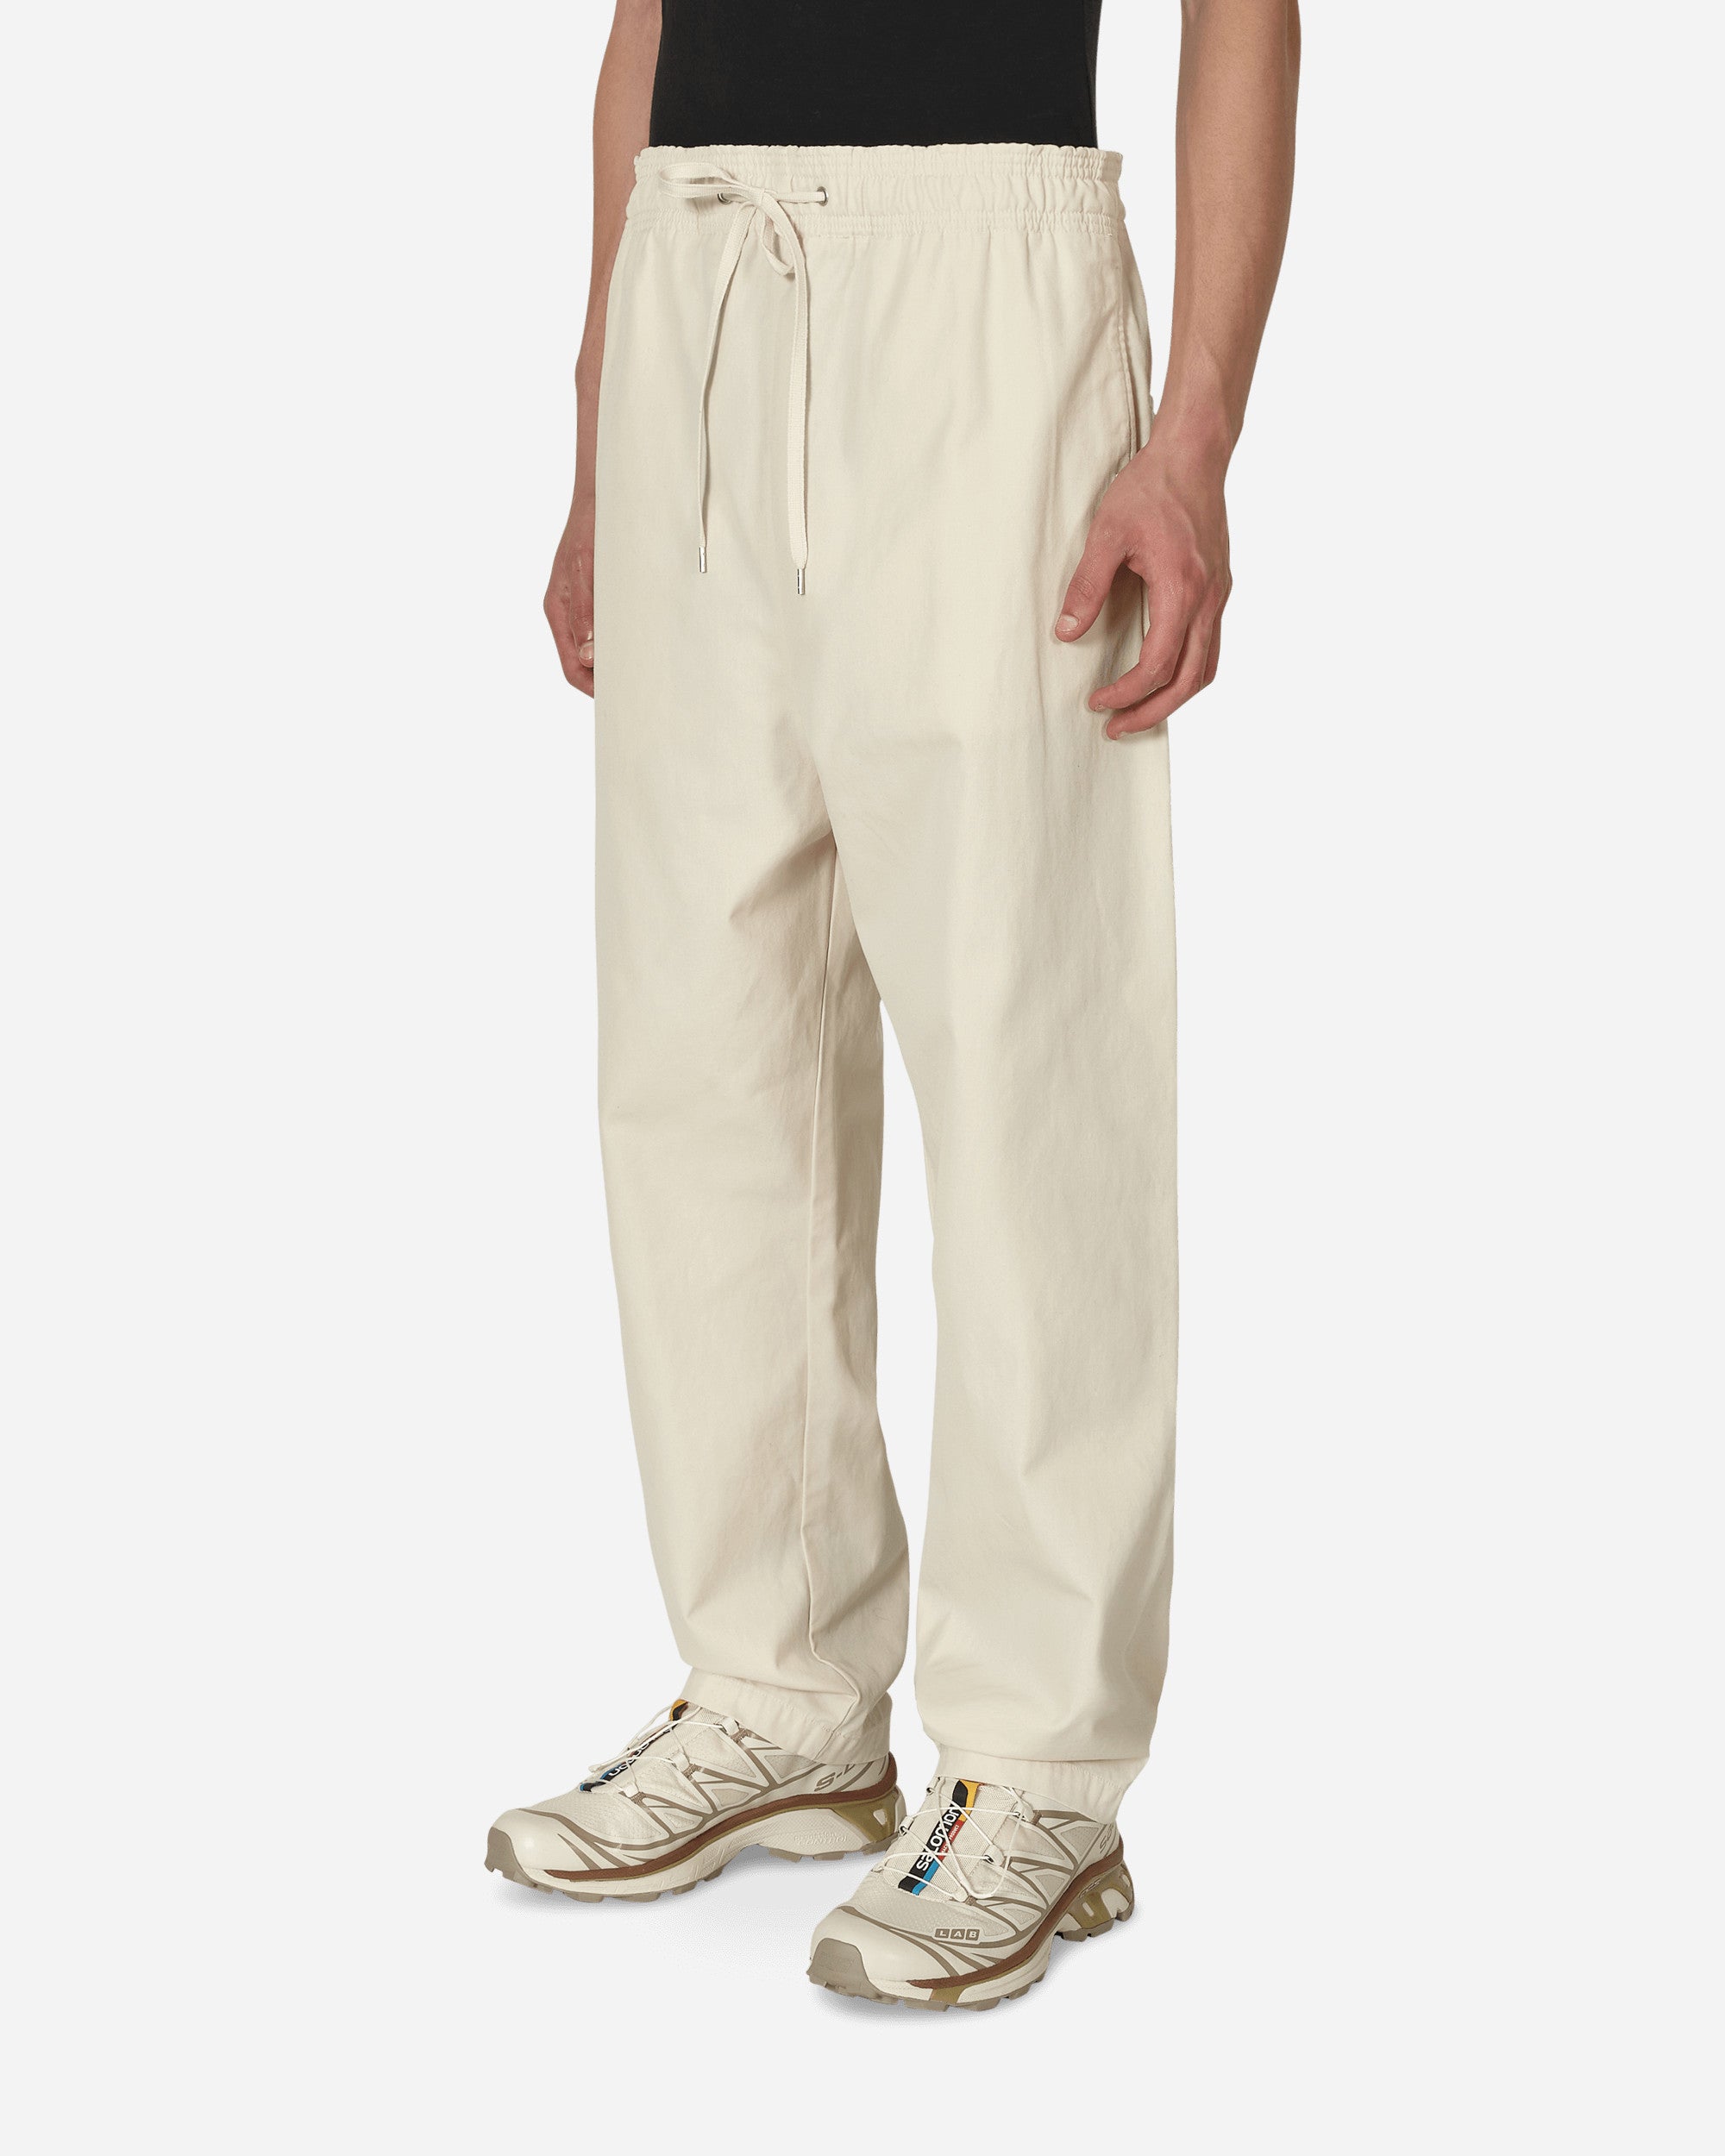 Instrumental No Side Seam Long Pants White Pants Trousers I06PT021 WHITE